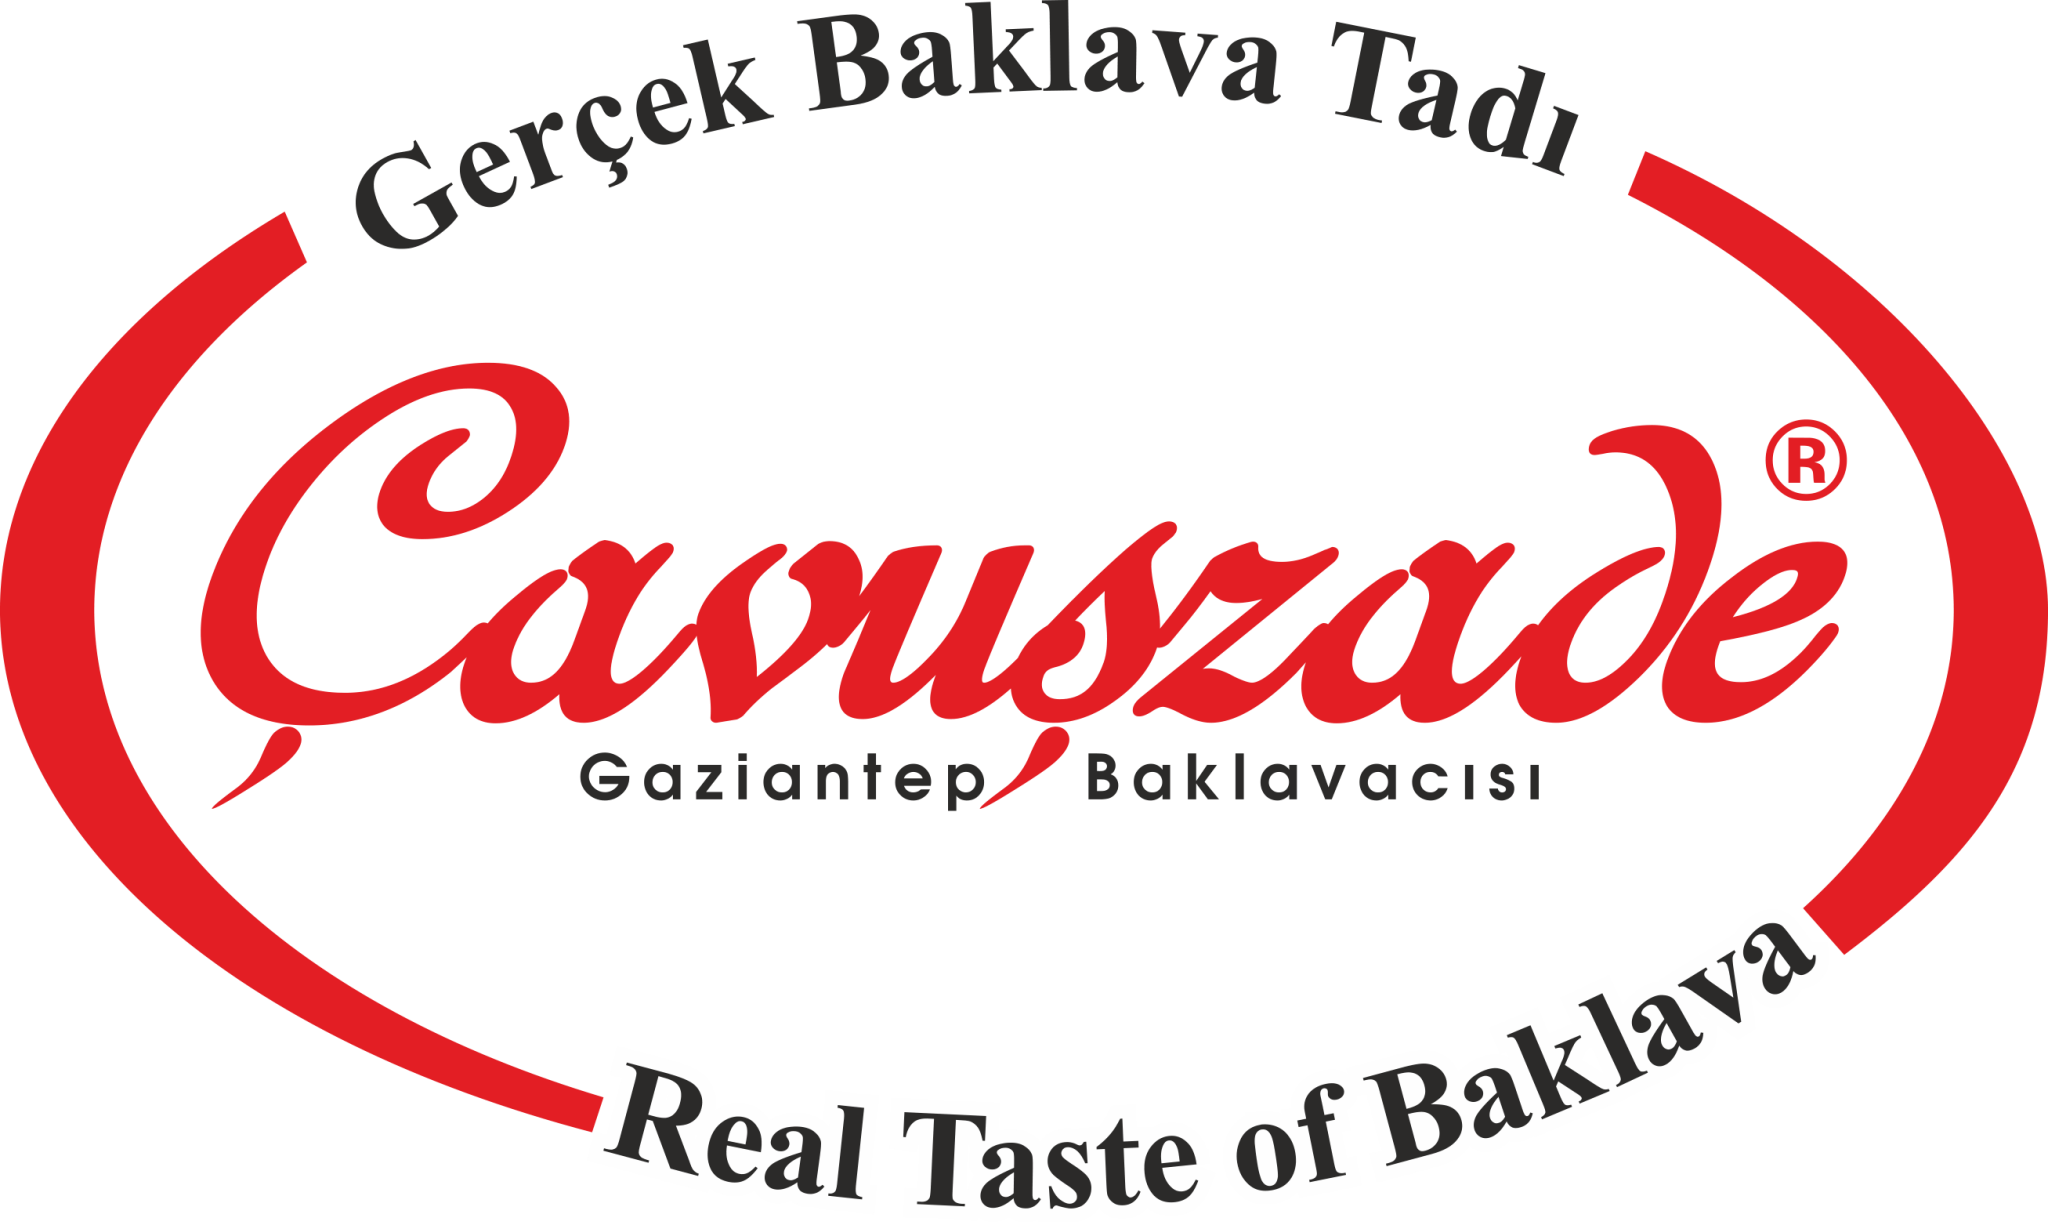 Cavuszade Bklava